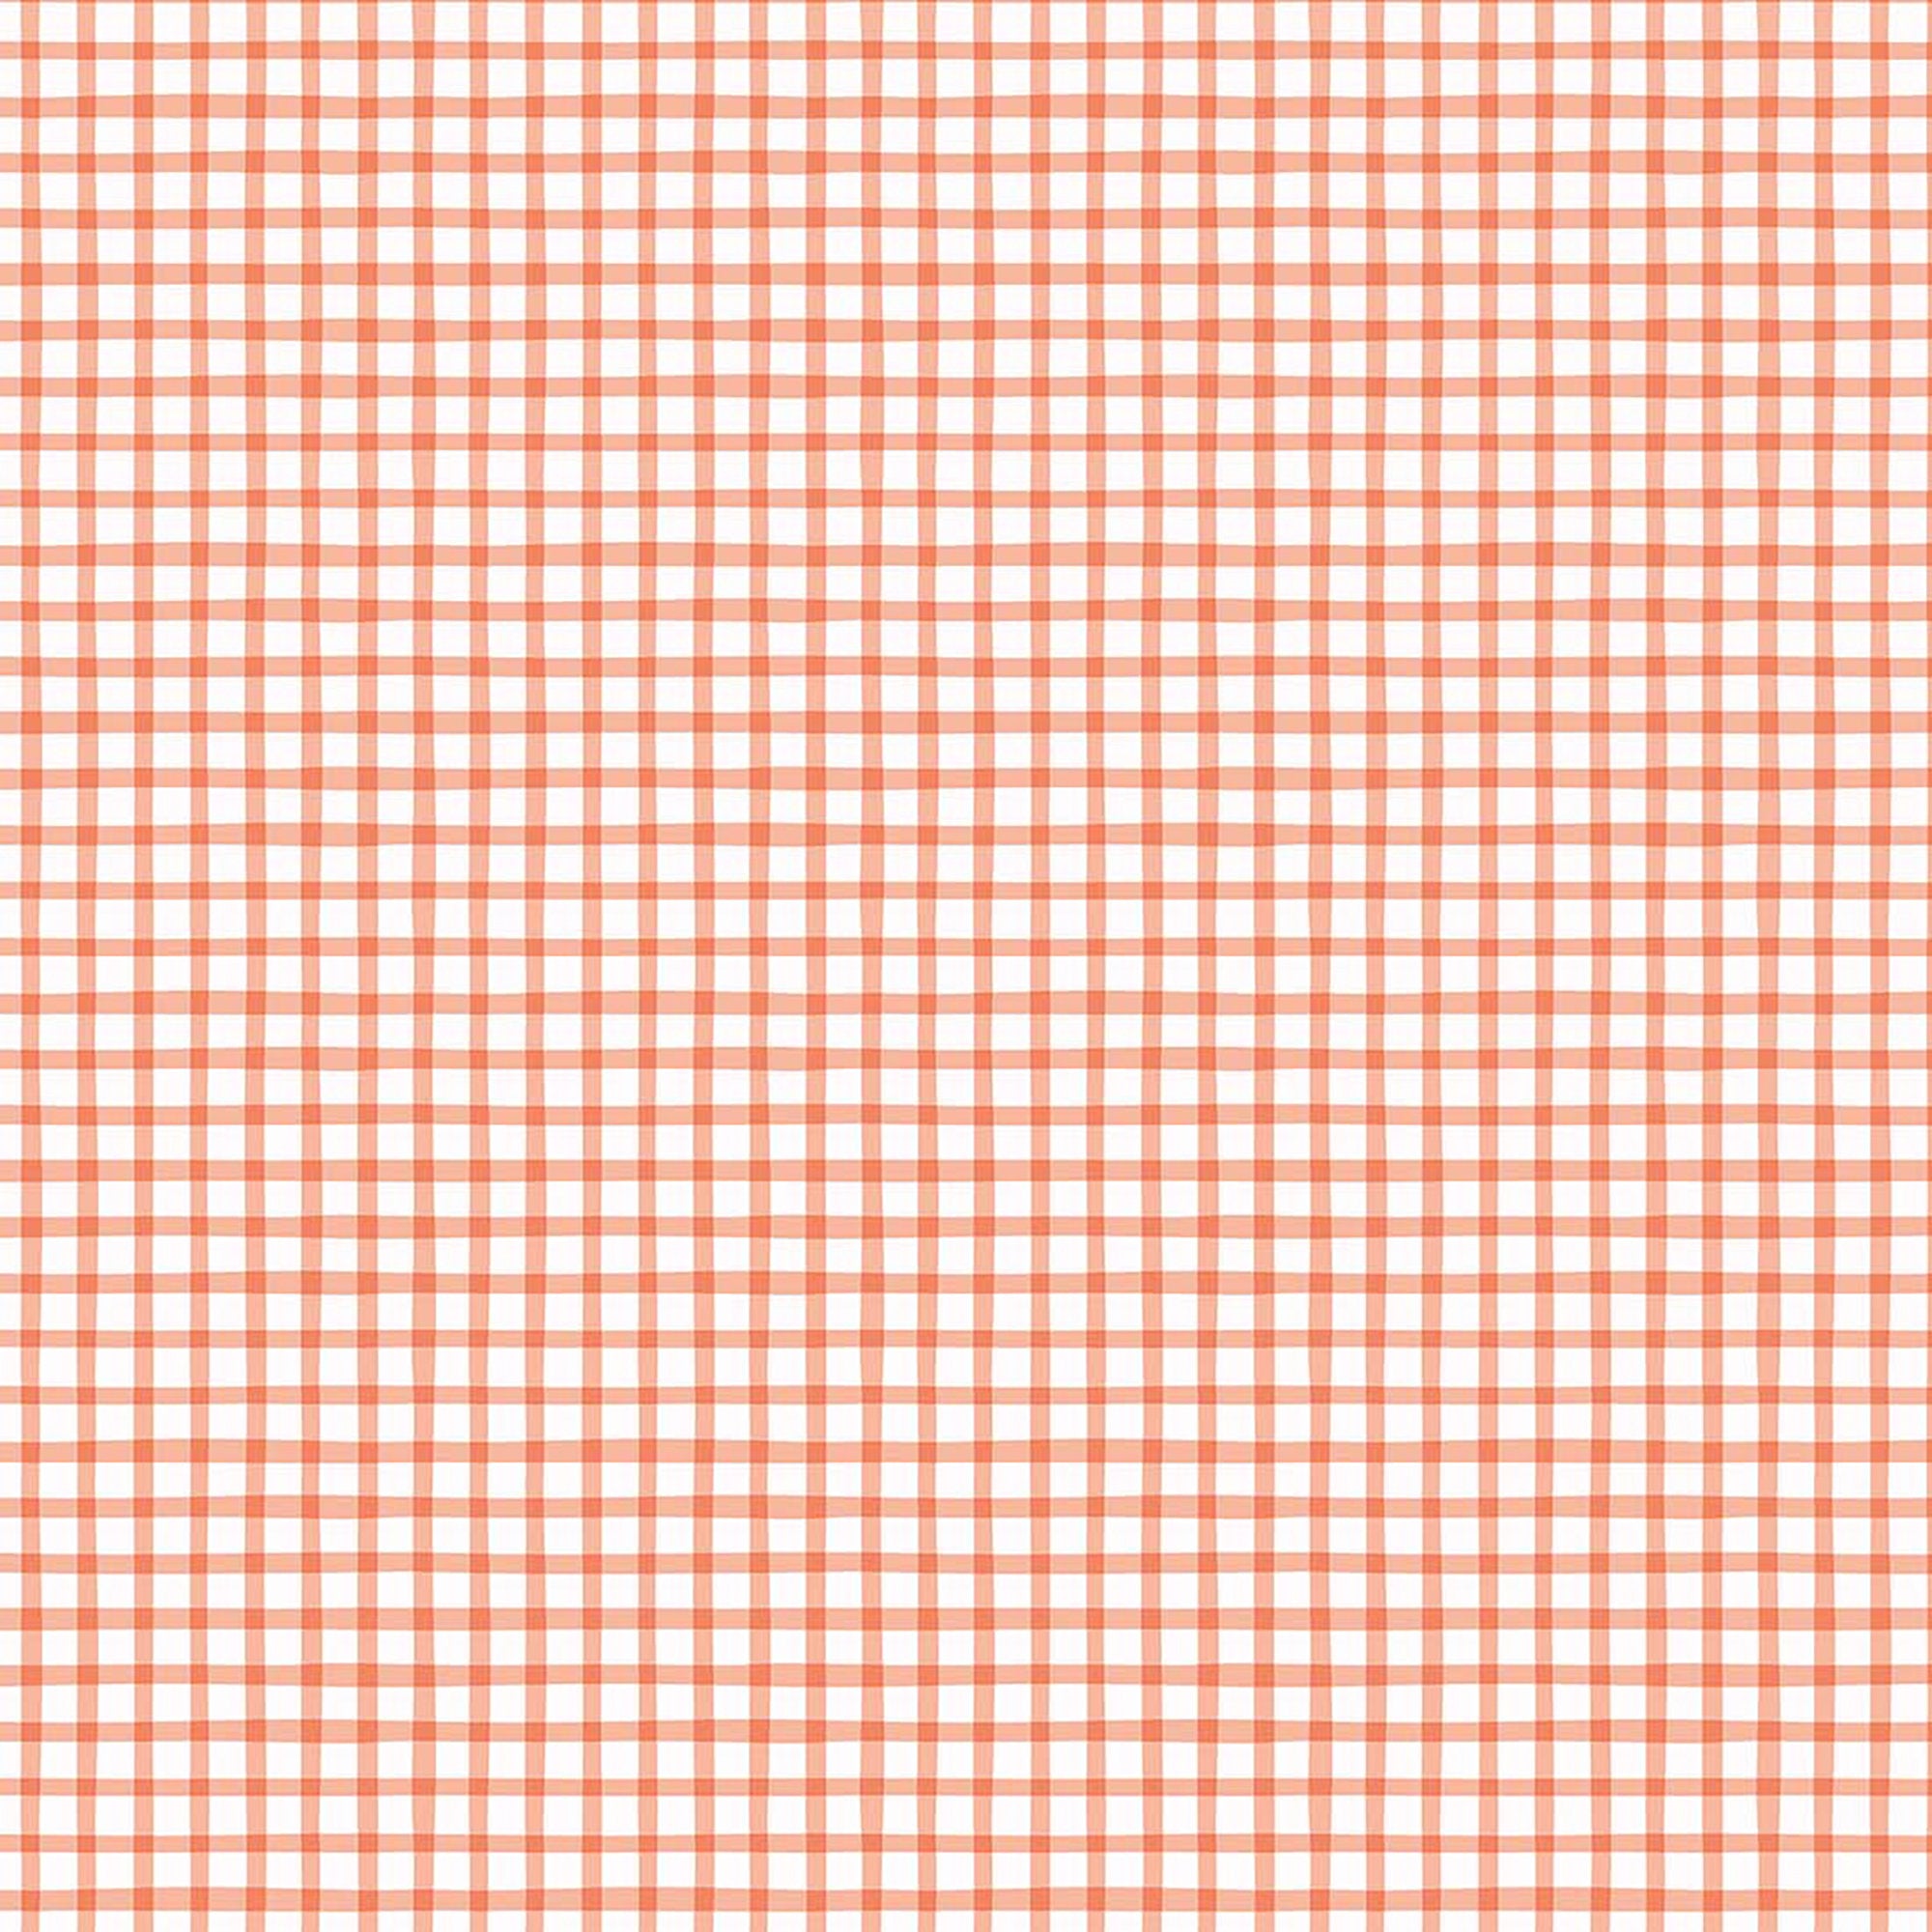 Life in Pattern - Plaid Orange Fabric